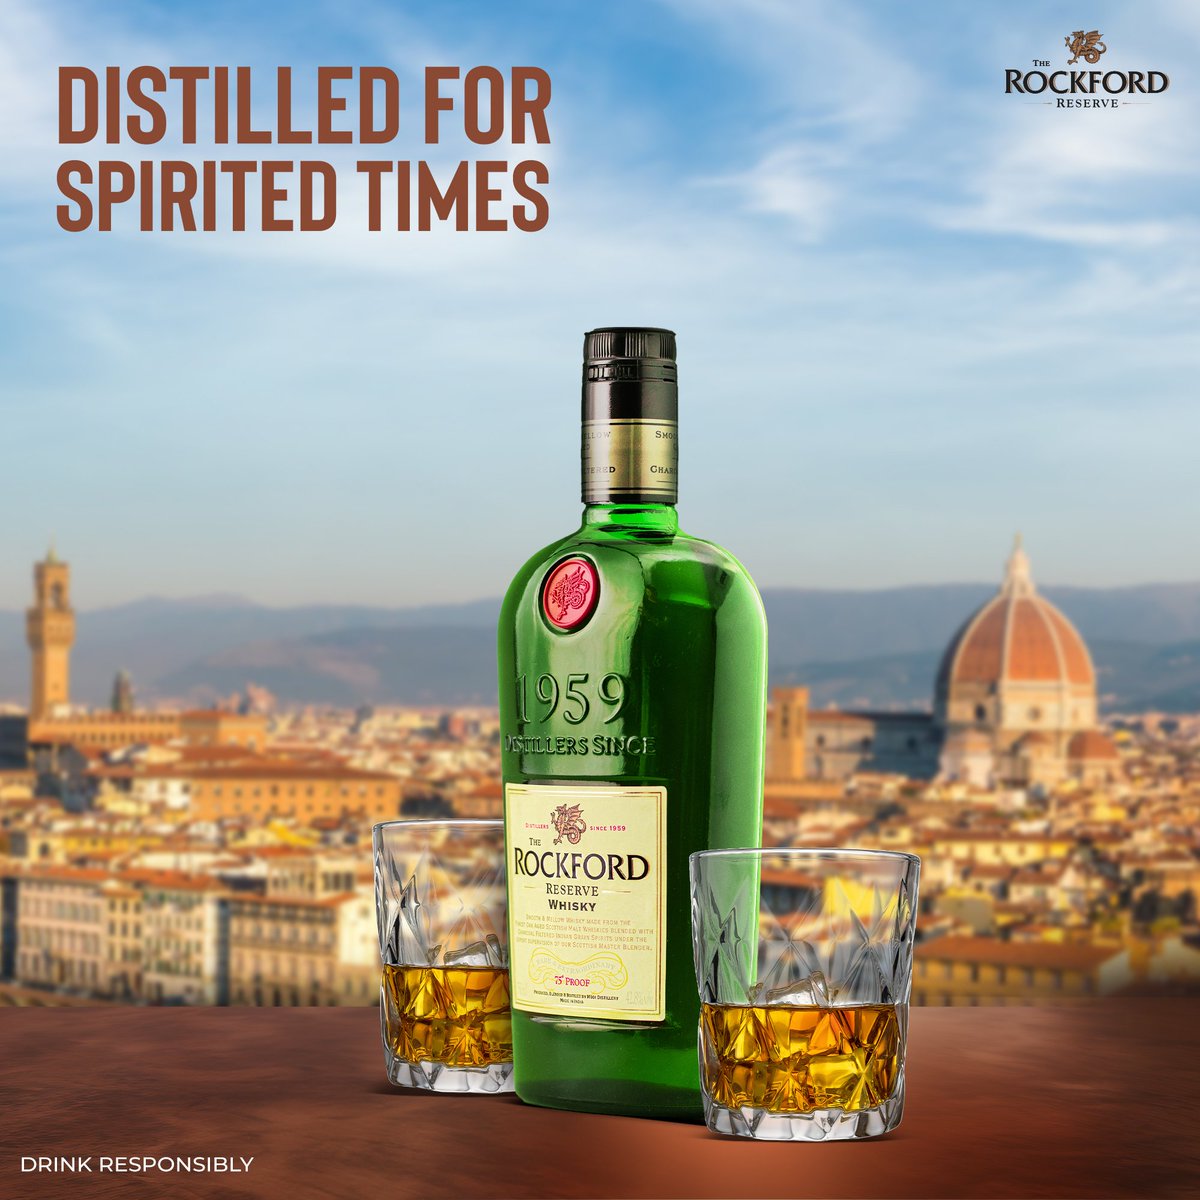 Distilled for spirited minds.

#SpiritedMindsDrinkAlike #SpiritedJourney #DrinkWithPassion #ToastToAdventure #whiskygram #FlavorfulSips #WhiskeyMoments #whiskylover #Rockford #RockfordIndia #RockfordReserve